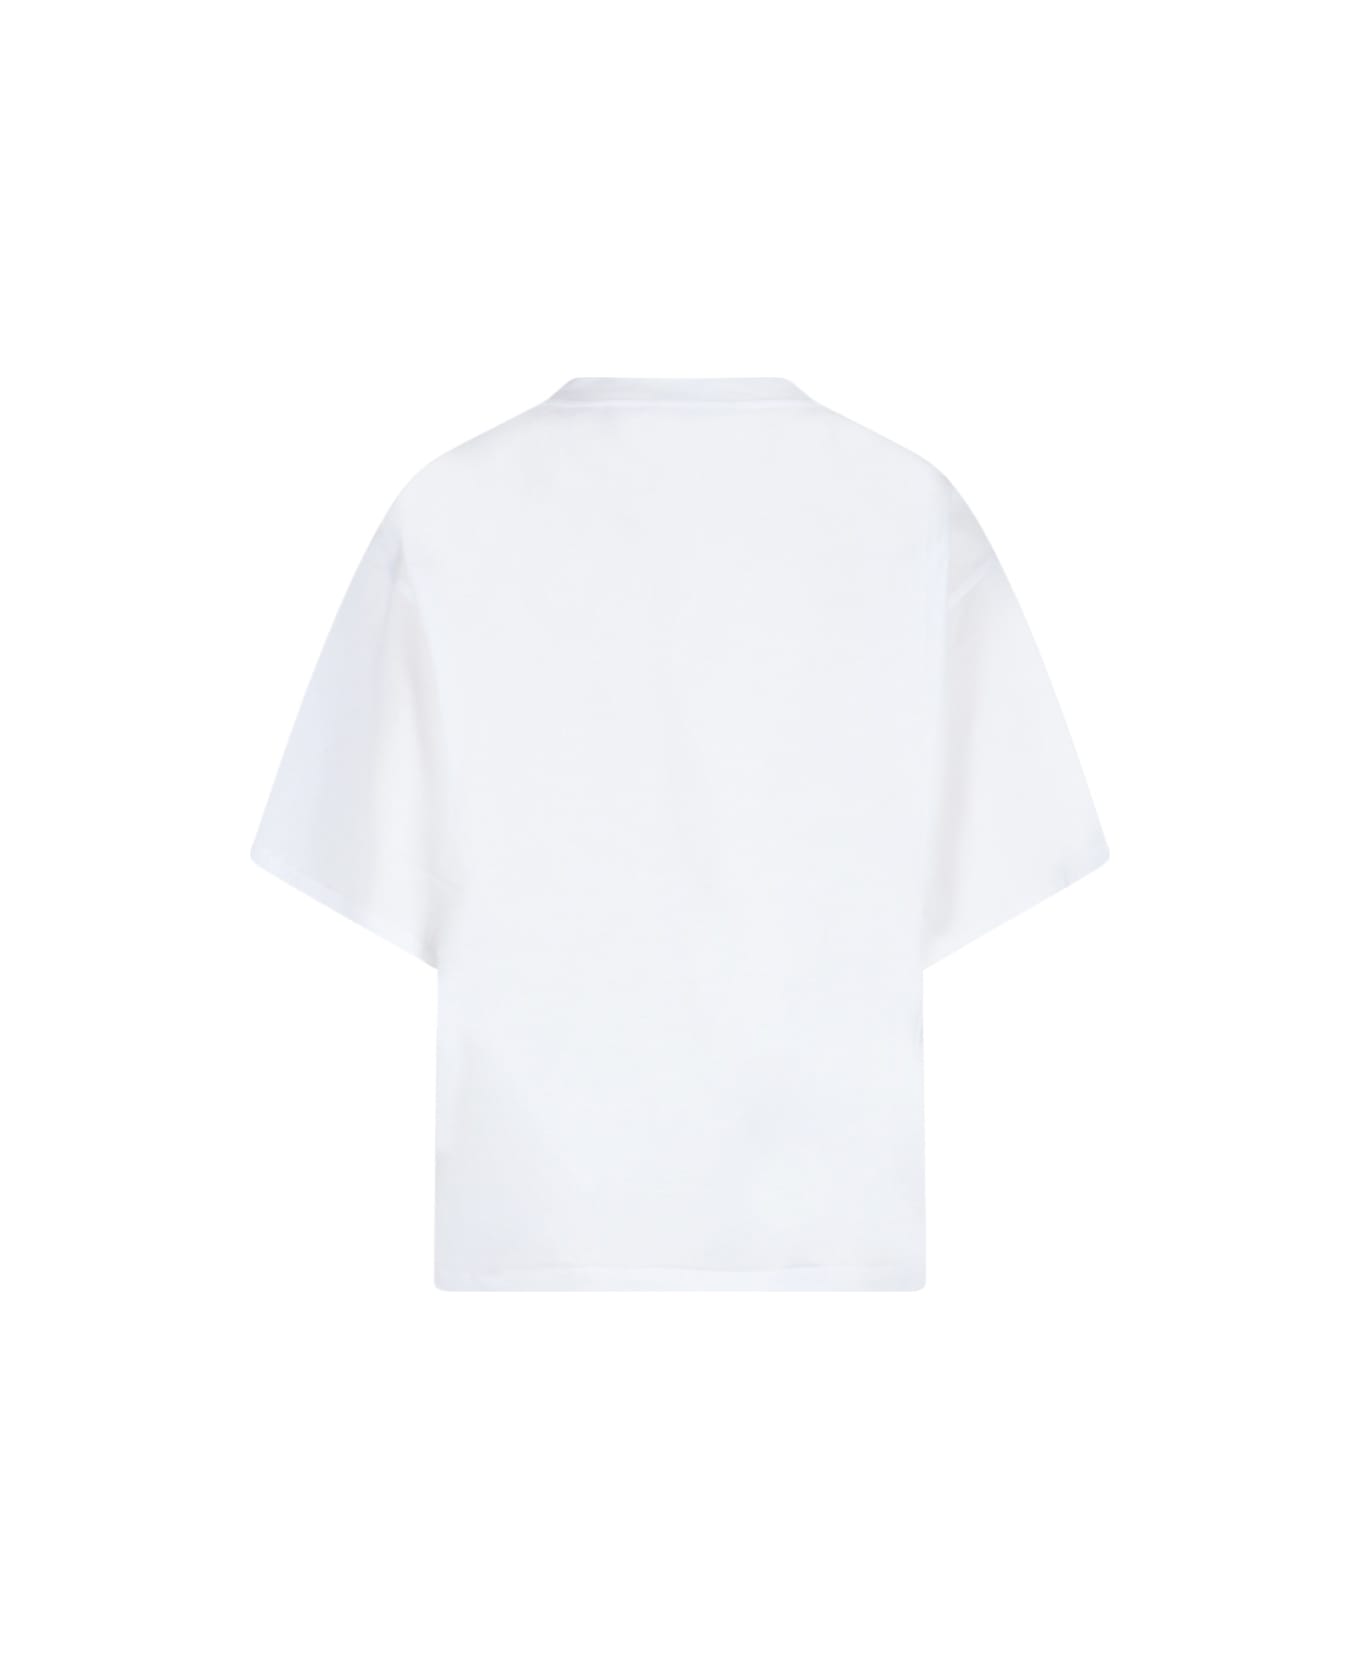 Dolce & Gabbana T-shirt Logo - White Tシャツ